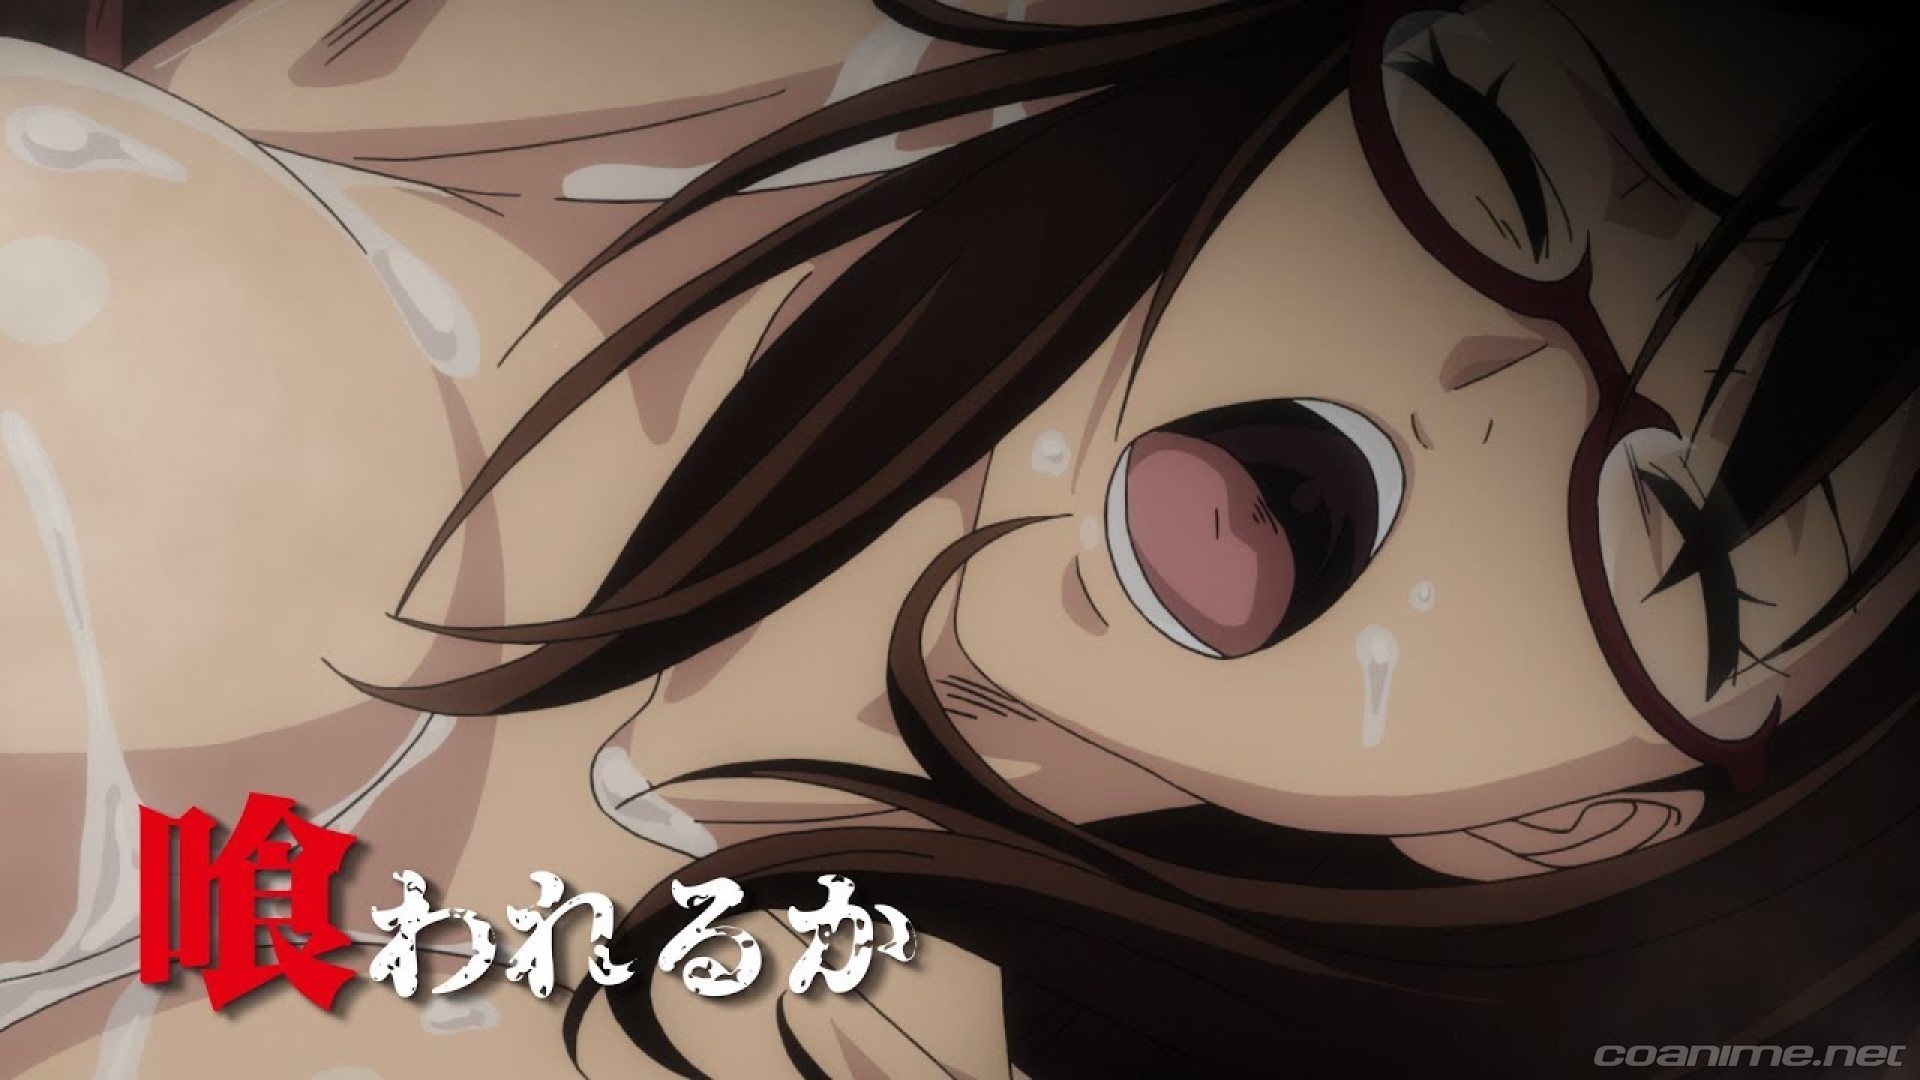 Video Promocional para la Pelicula Anime de Kyochuu Rettou